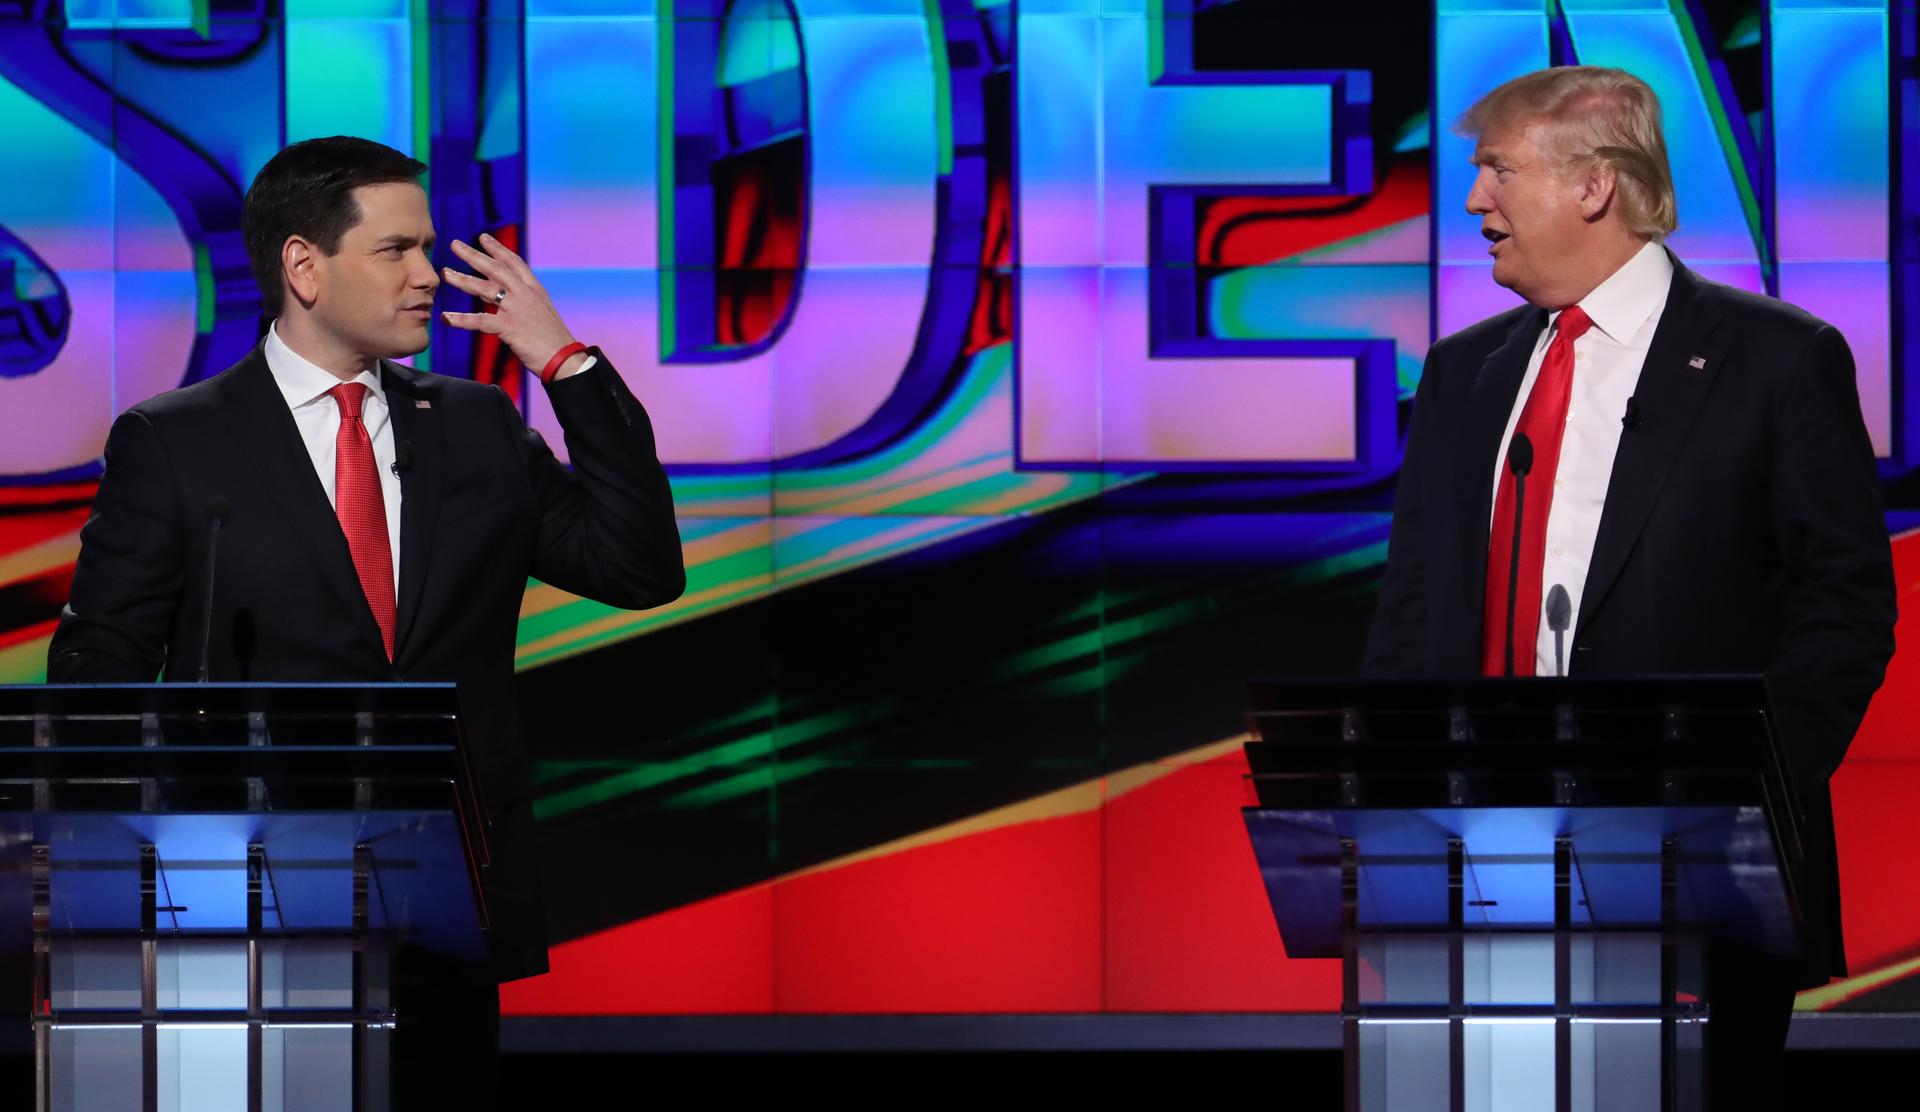 GOP debates Trump and Rubio